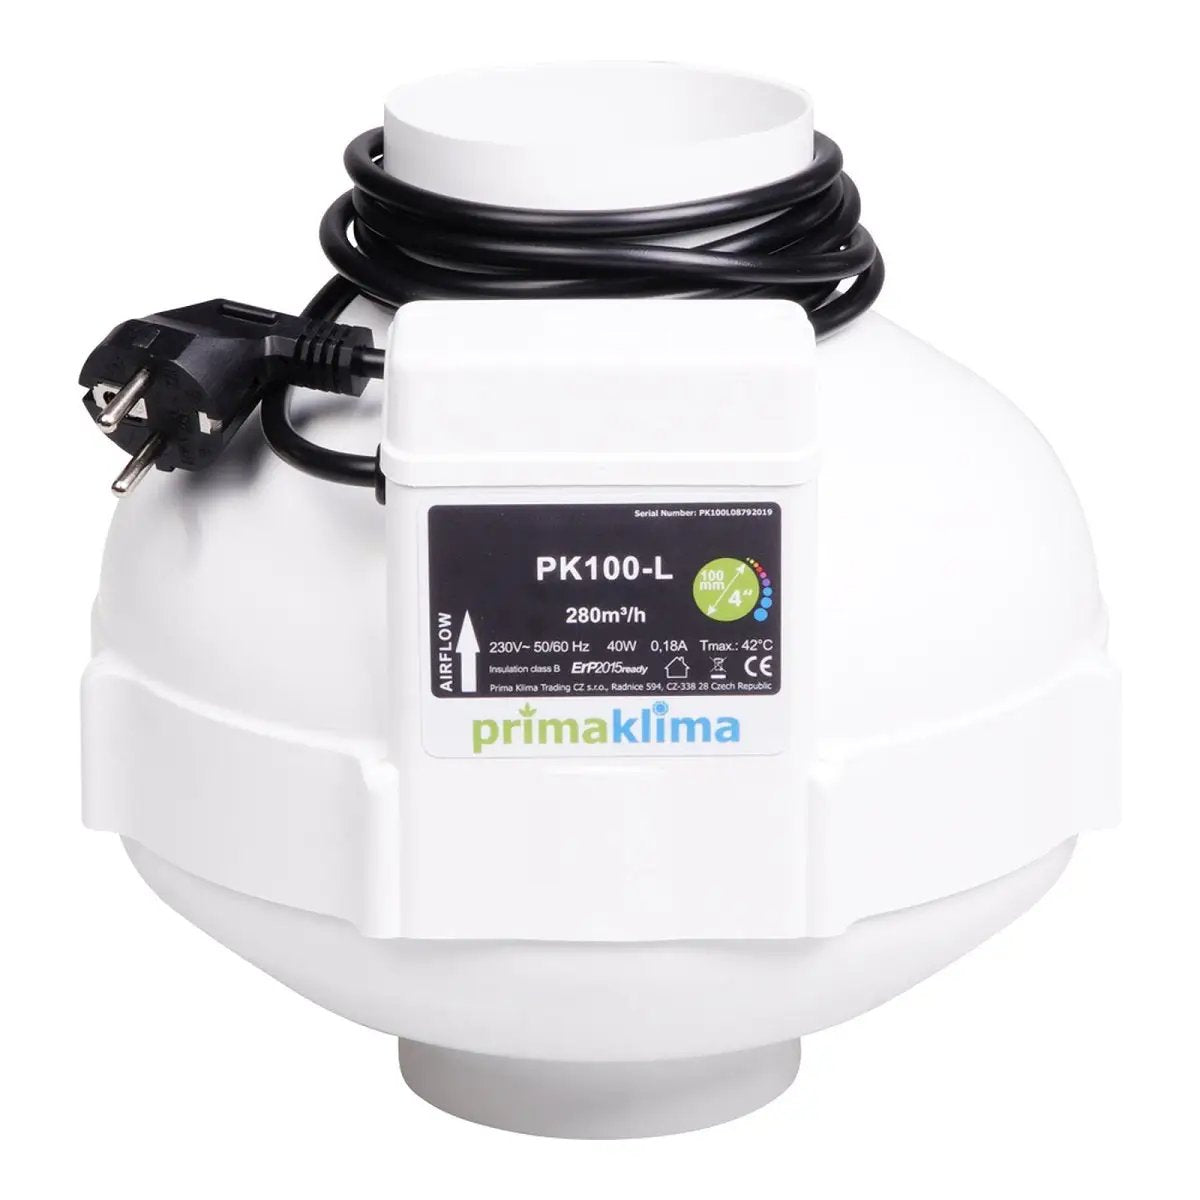 Extracteur Prima Klima PK100-L 280m3/h